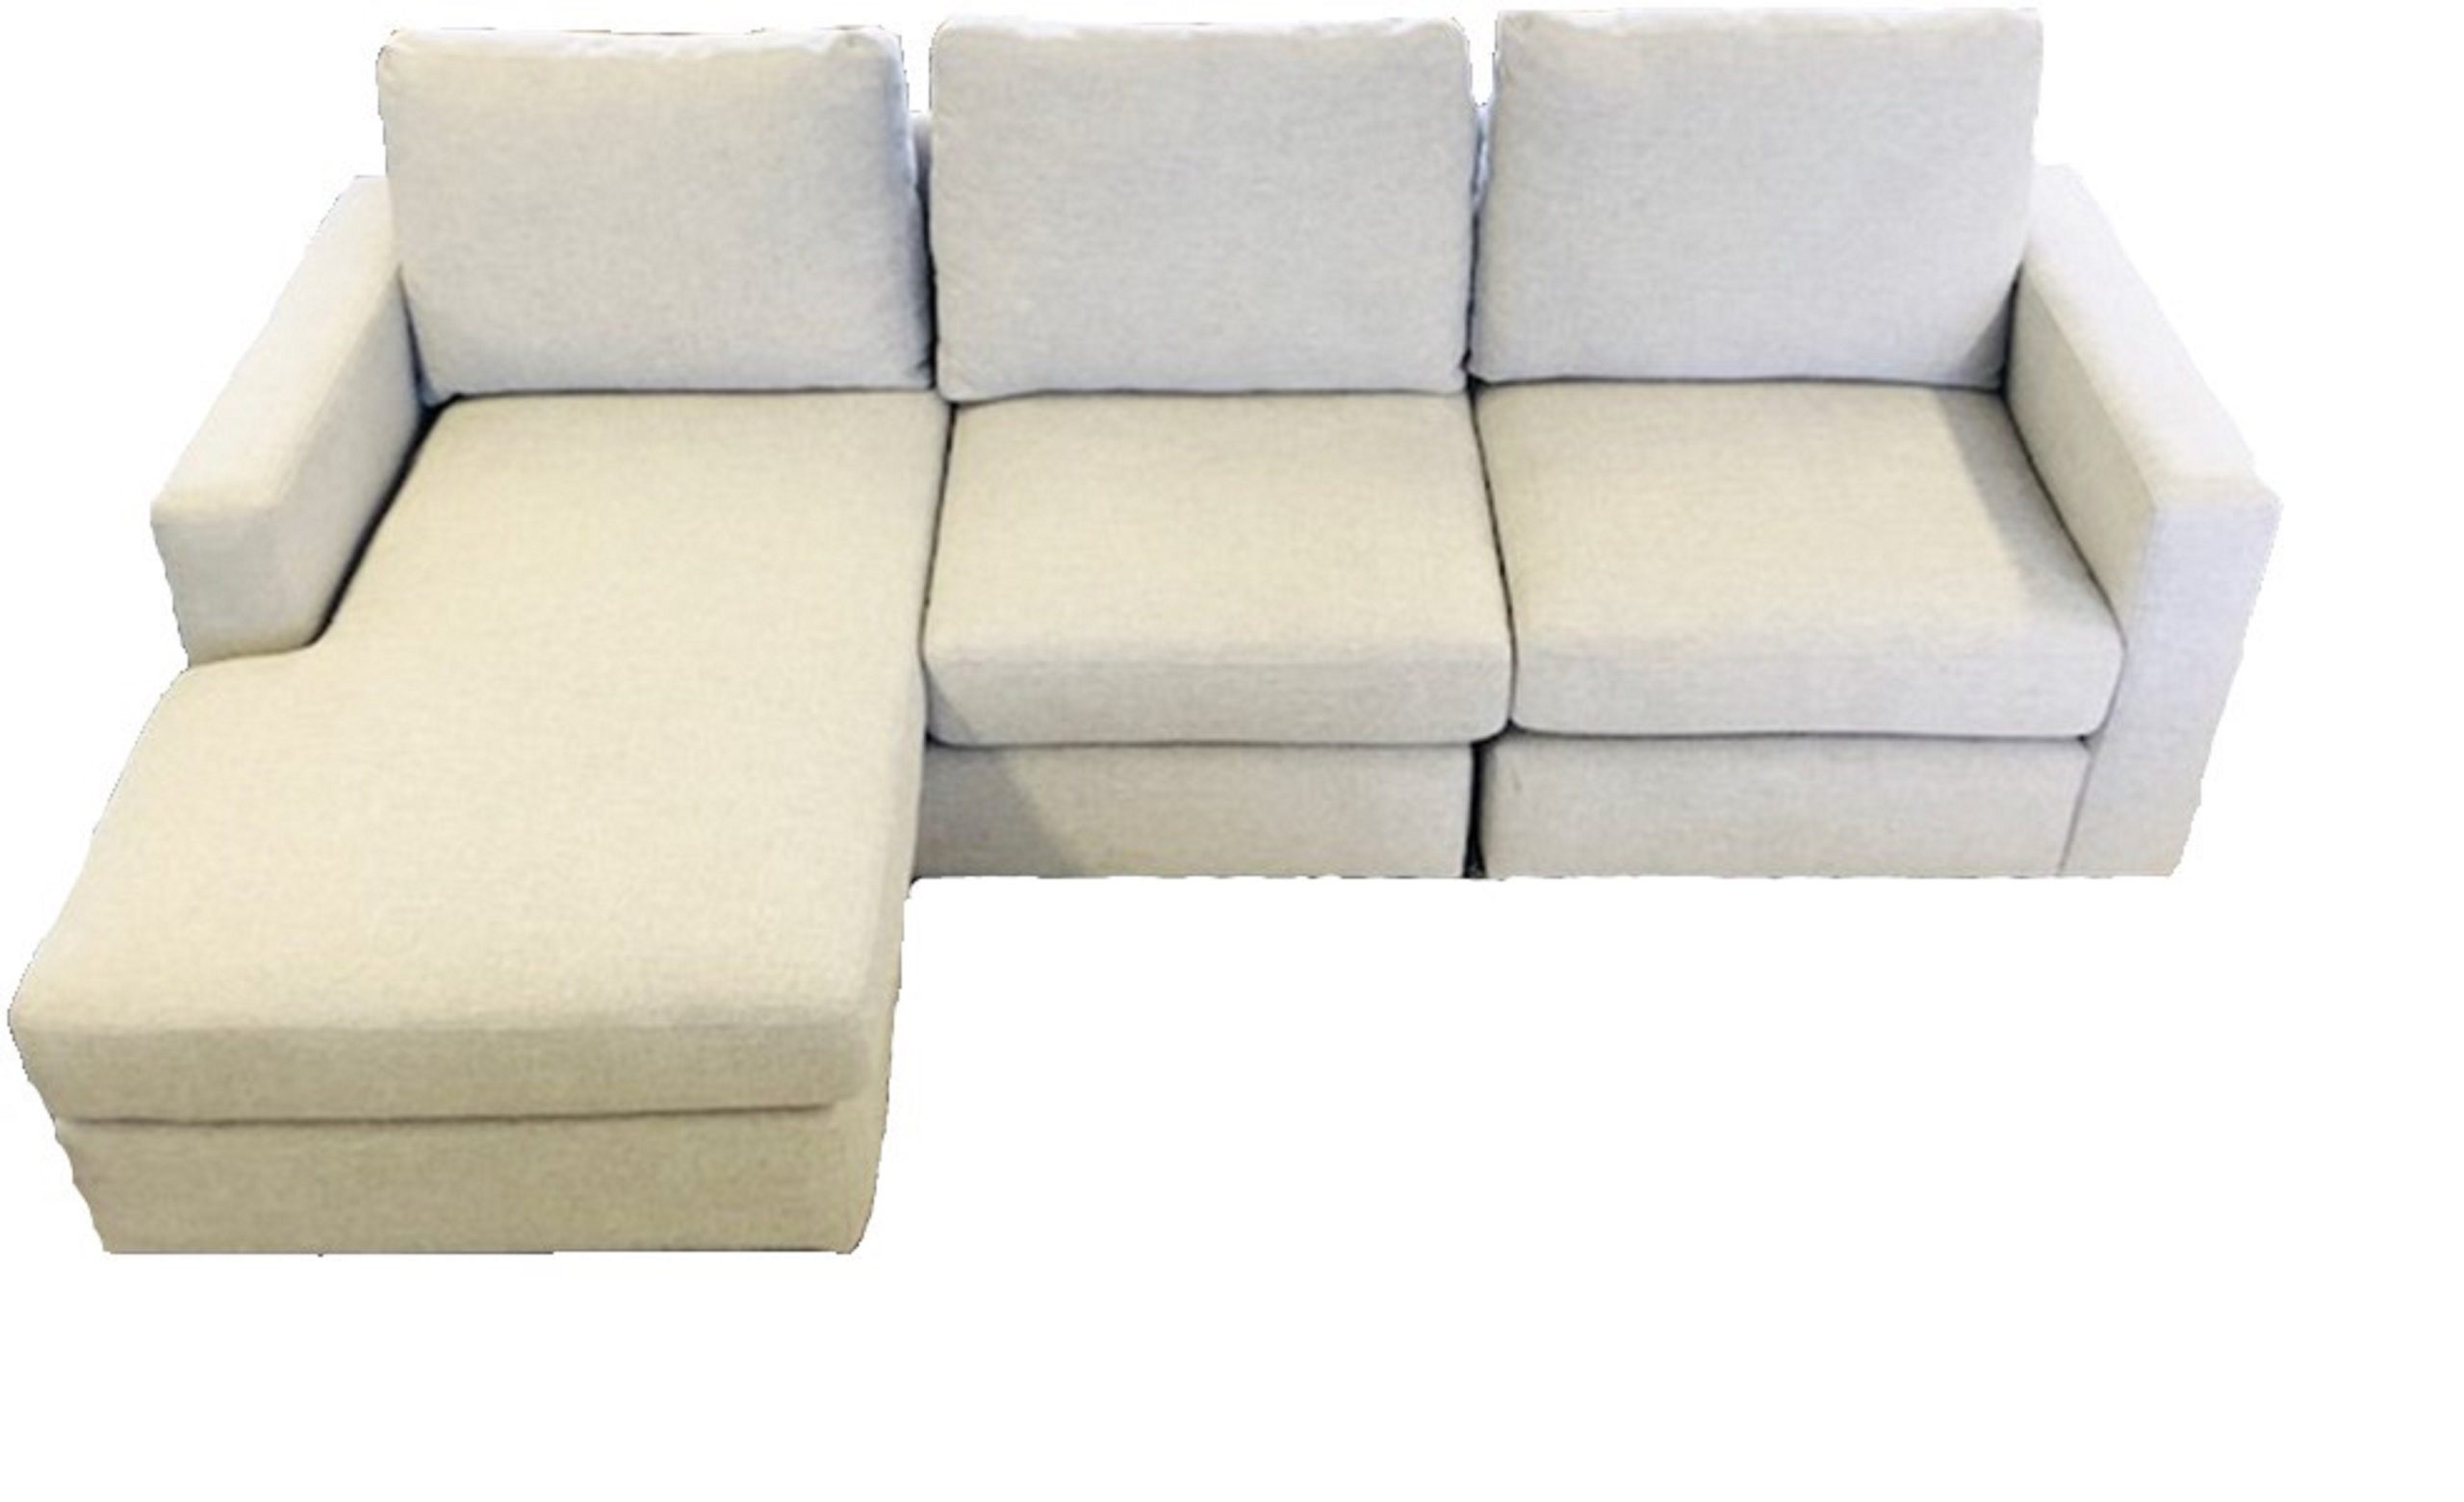 Sofa 2 Seater + Reversible Chaise Noosa Denver Moonstone Beige W2430 x D950 x H880mm Chaise D1600mm